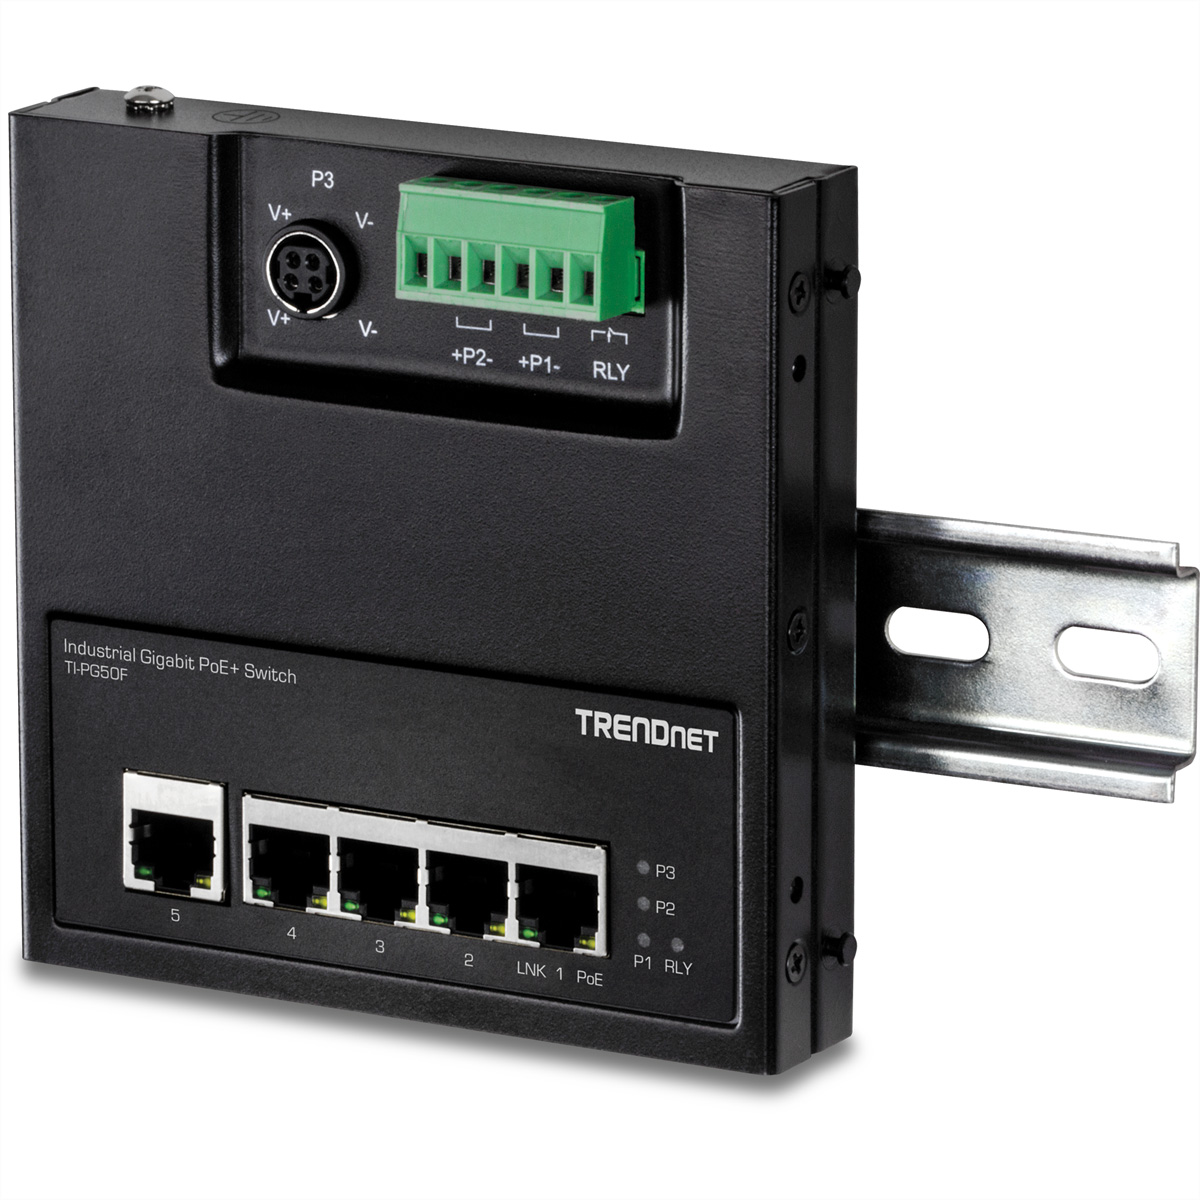 Switch Gigabit TI-PG50F Industrial Access 5-Port Front PoE TRENDNET PoE+ Gigabit Switch